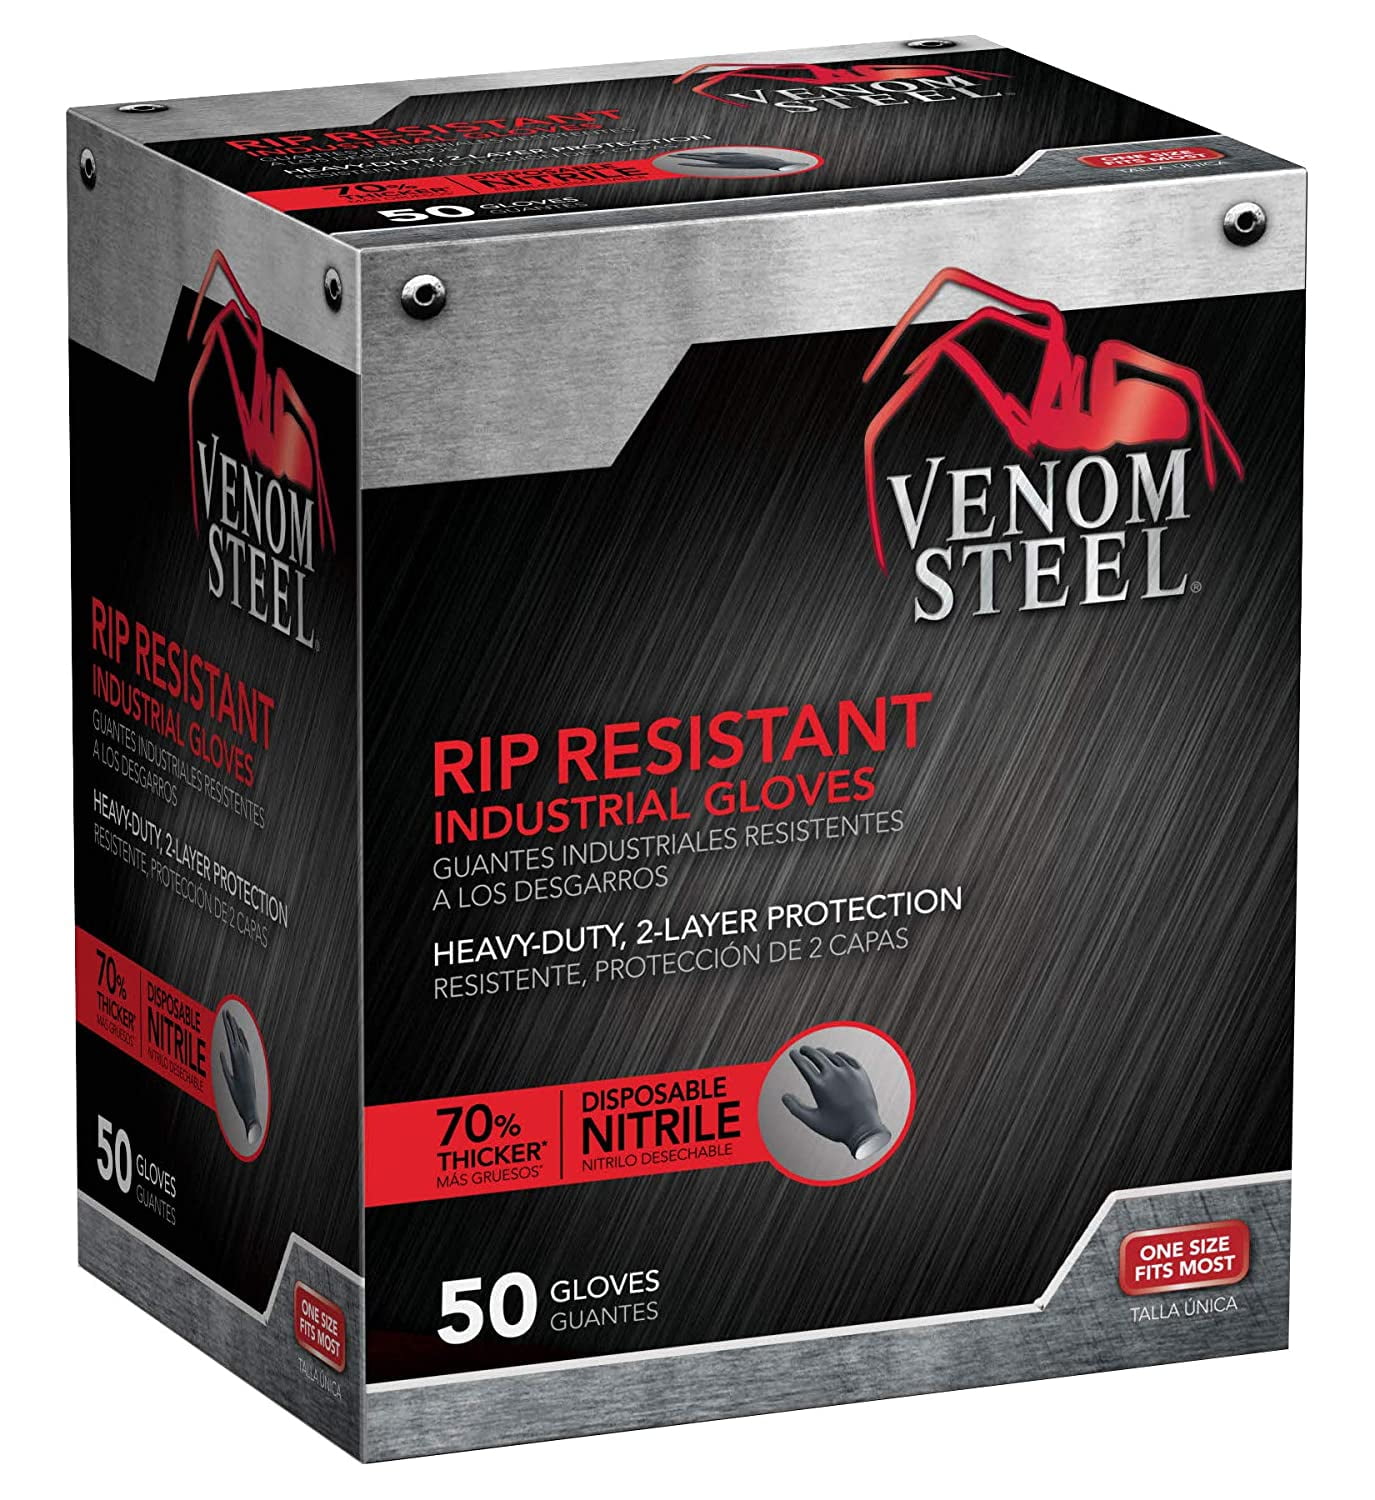 Venom Steel Premium Industrial Nitrile Gloves, Black, One Size Fits Most, 50 Count